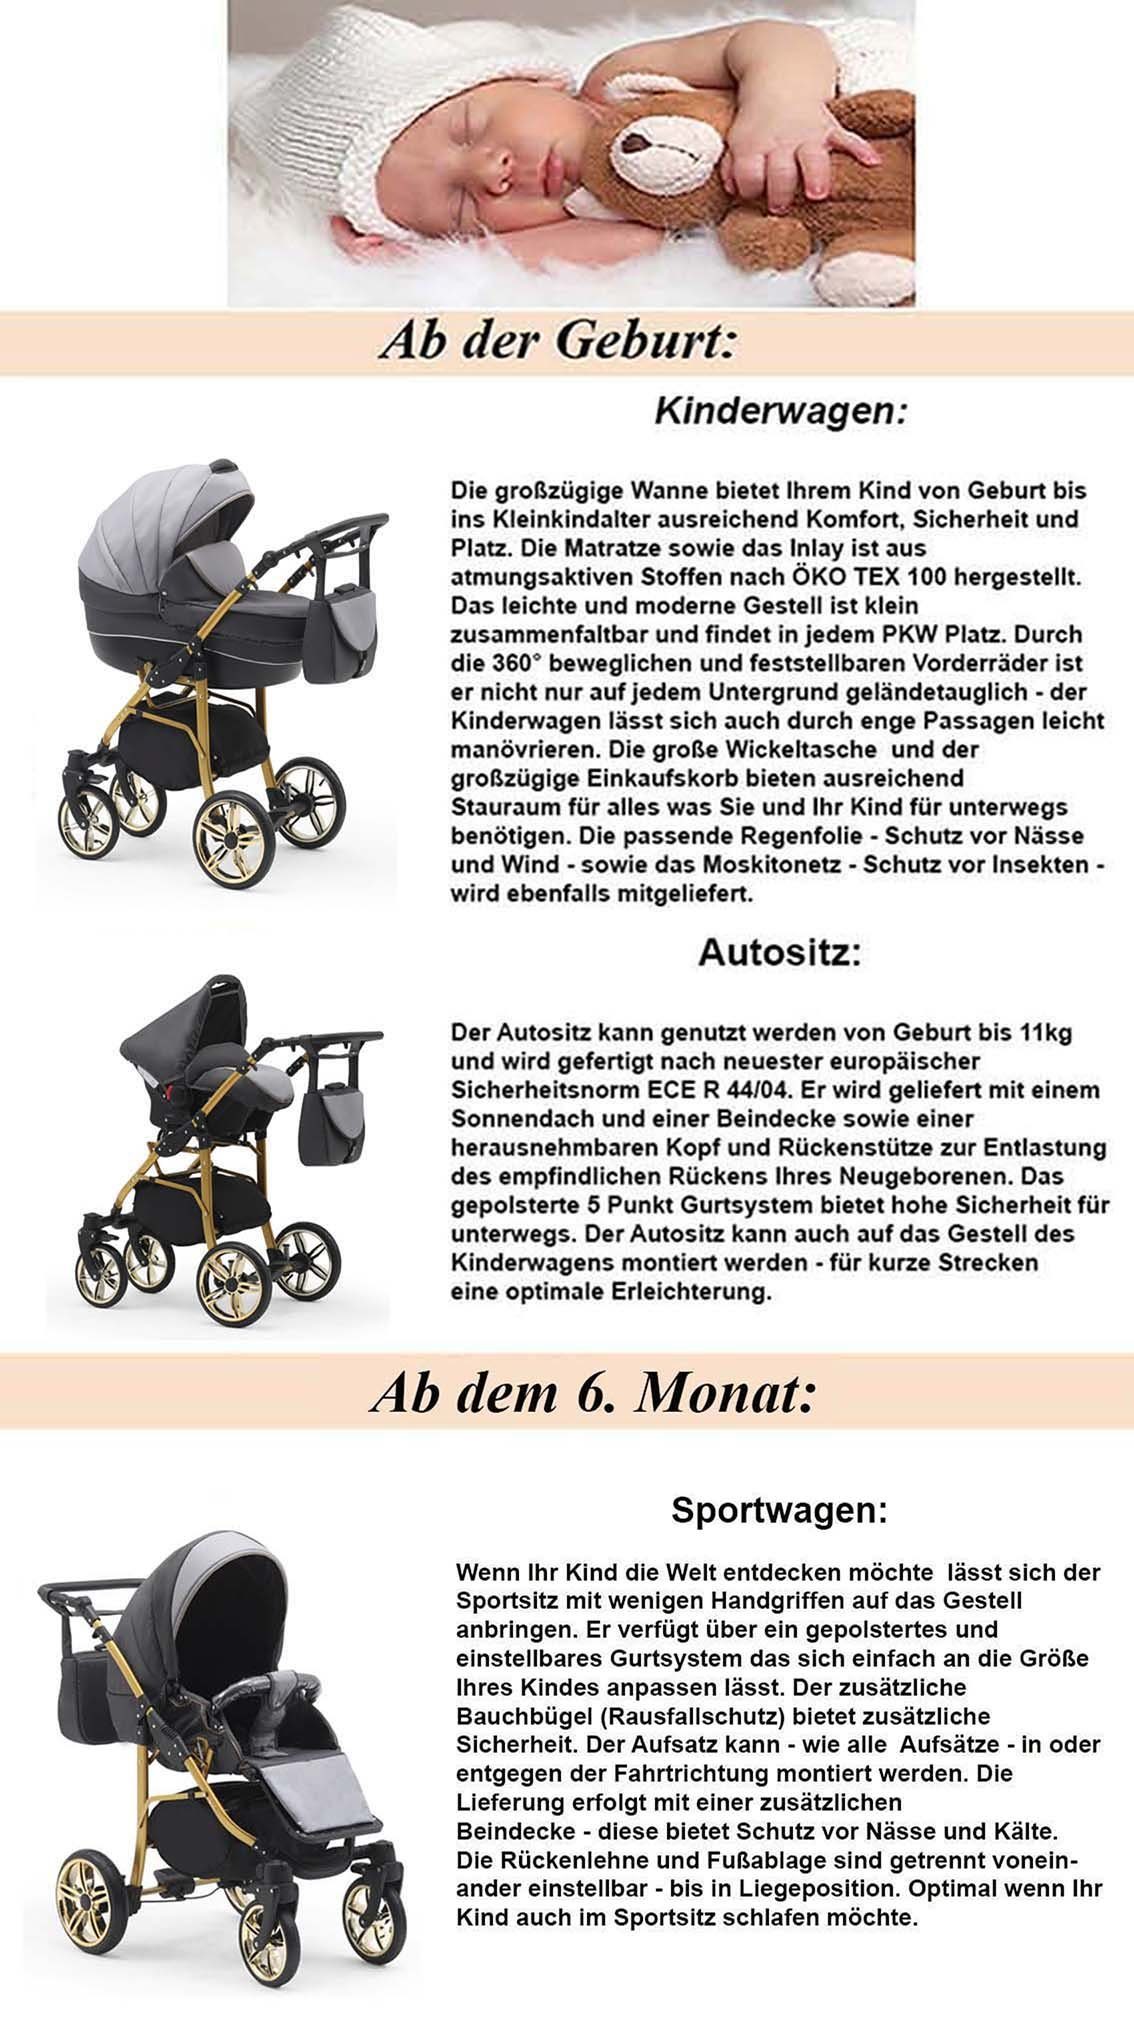 babies-on-wheels Kombi-Kinderwagen 2 in Gold Farben Kinderwagen-Set 13 in Cosmo - Teile 46 1 Hellgrau-Schwarz 